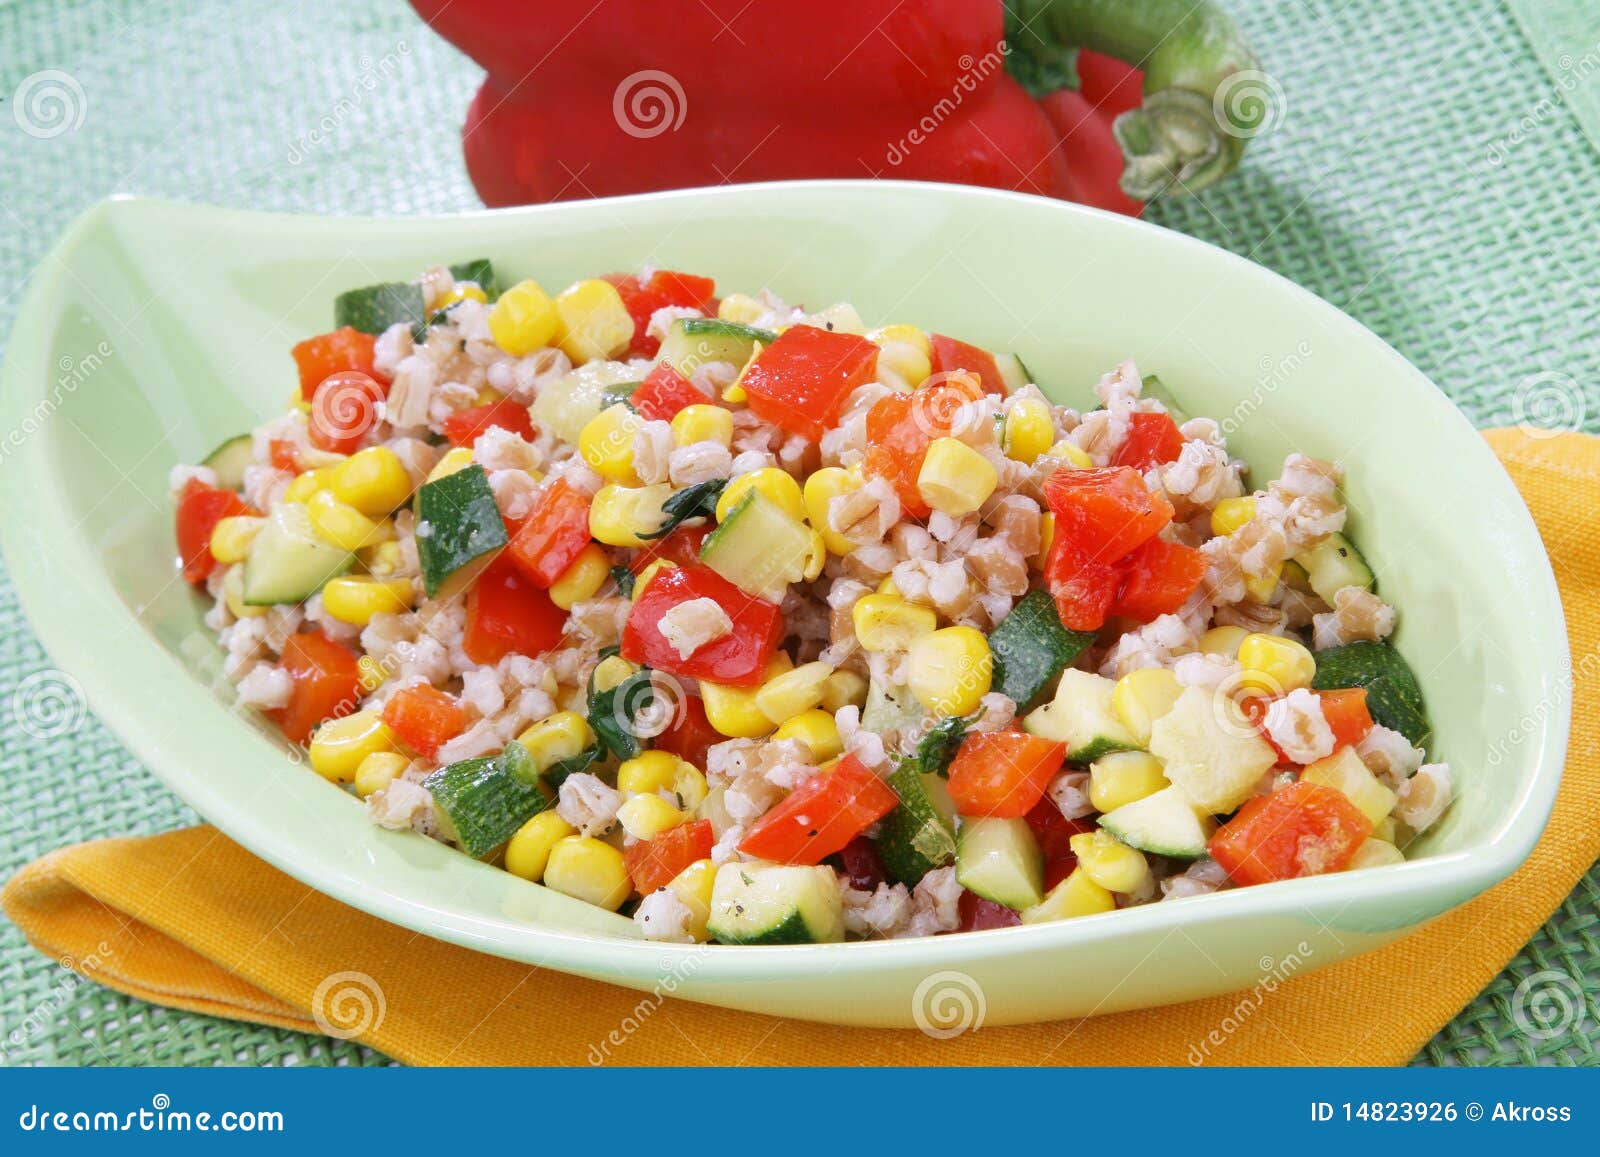 spelled salad with vegetables